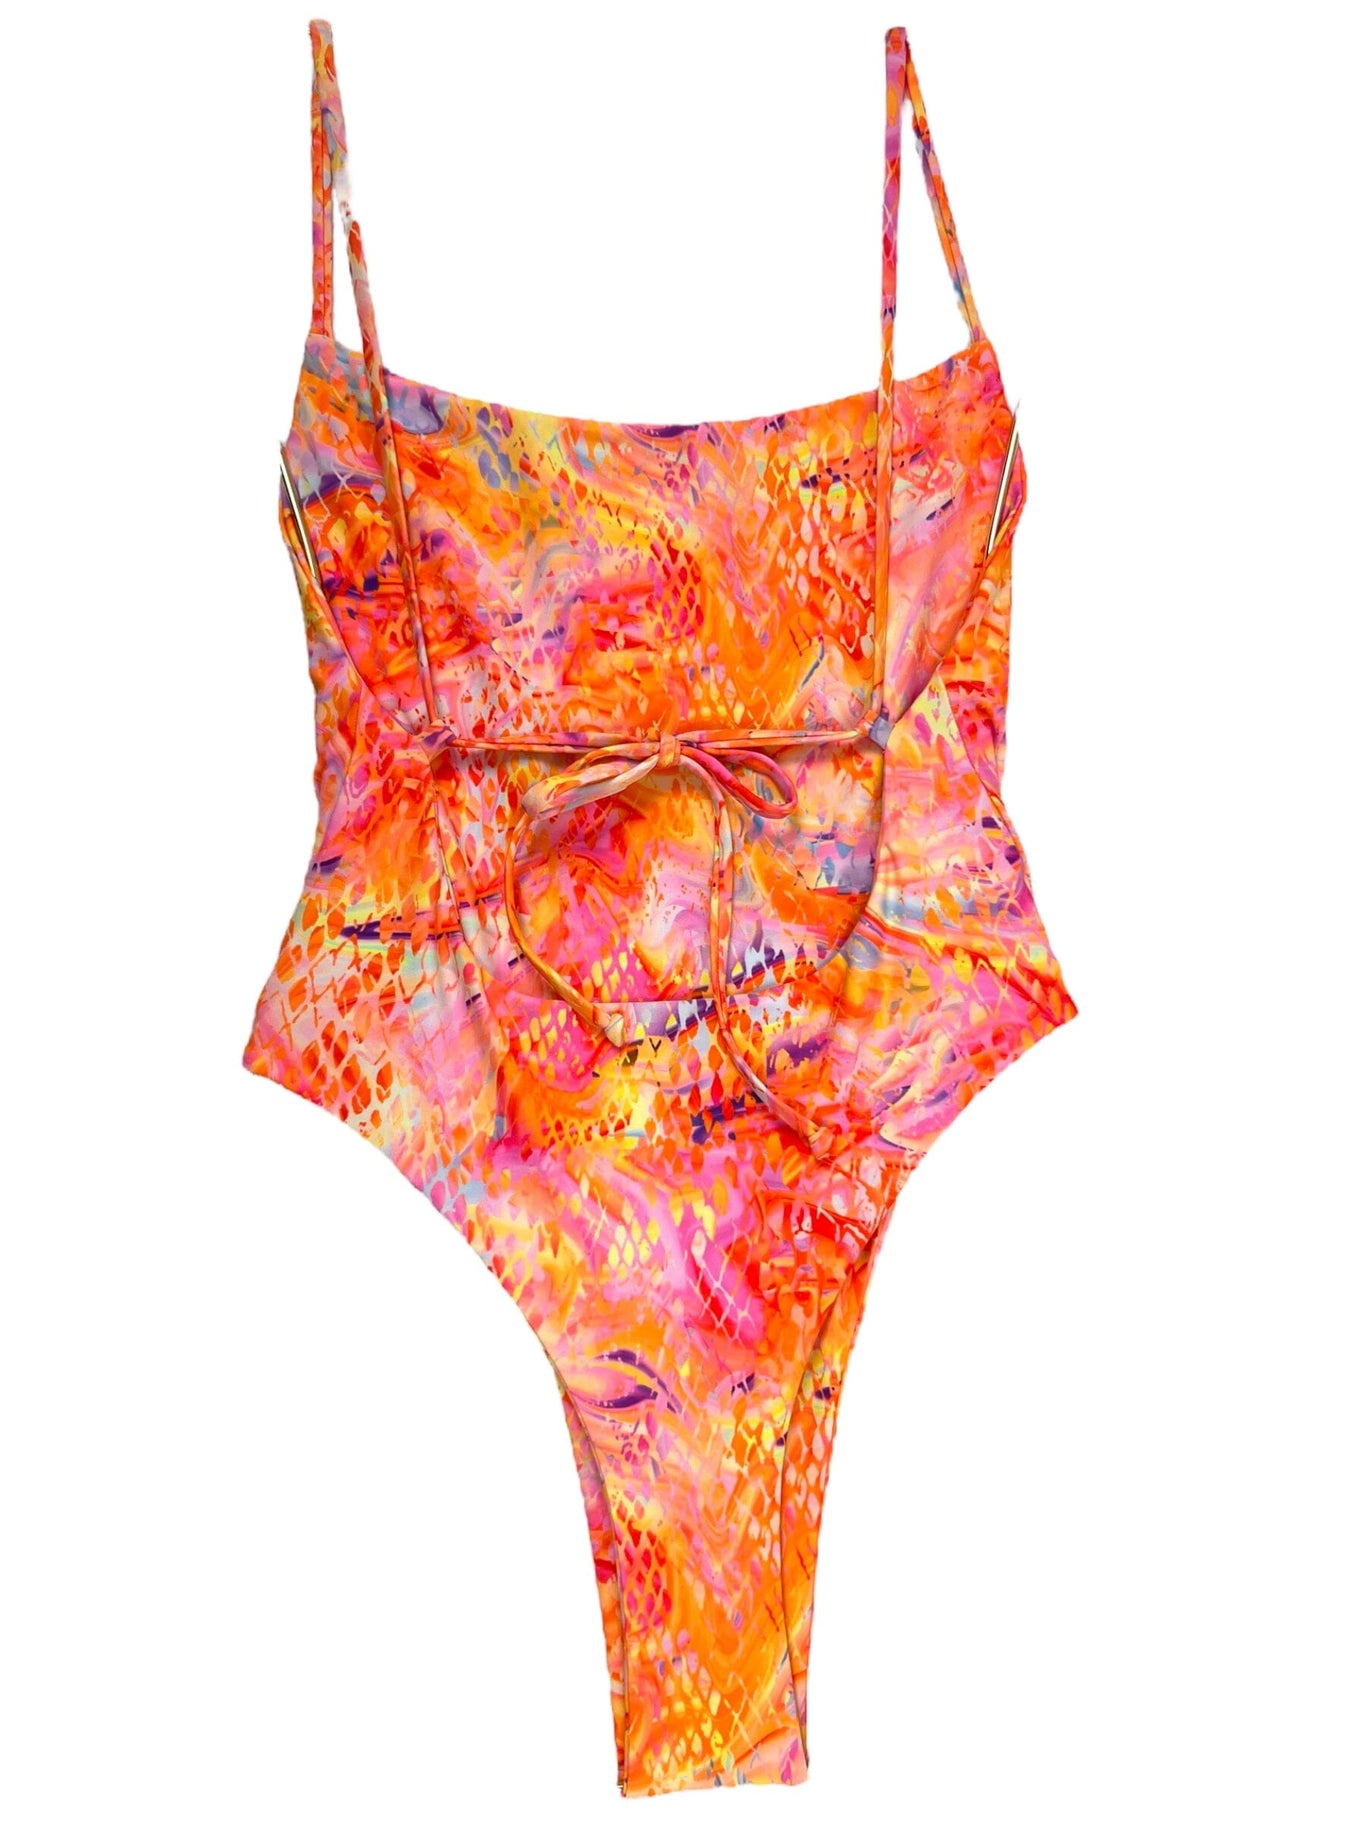 WANDERER ONE PIECE - Berry Beachy Swimwear